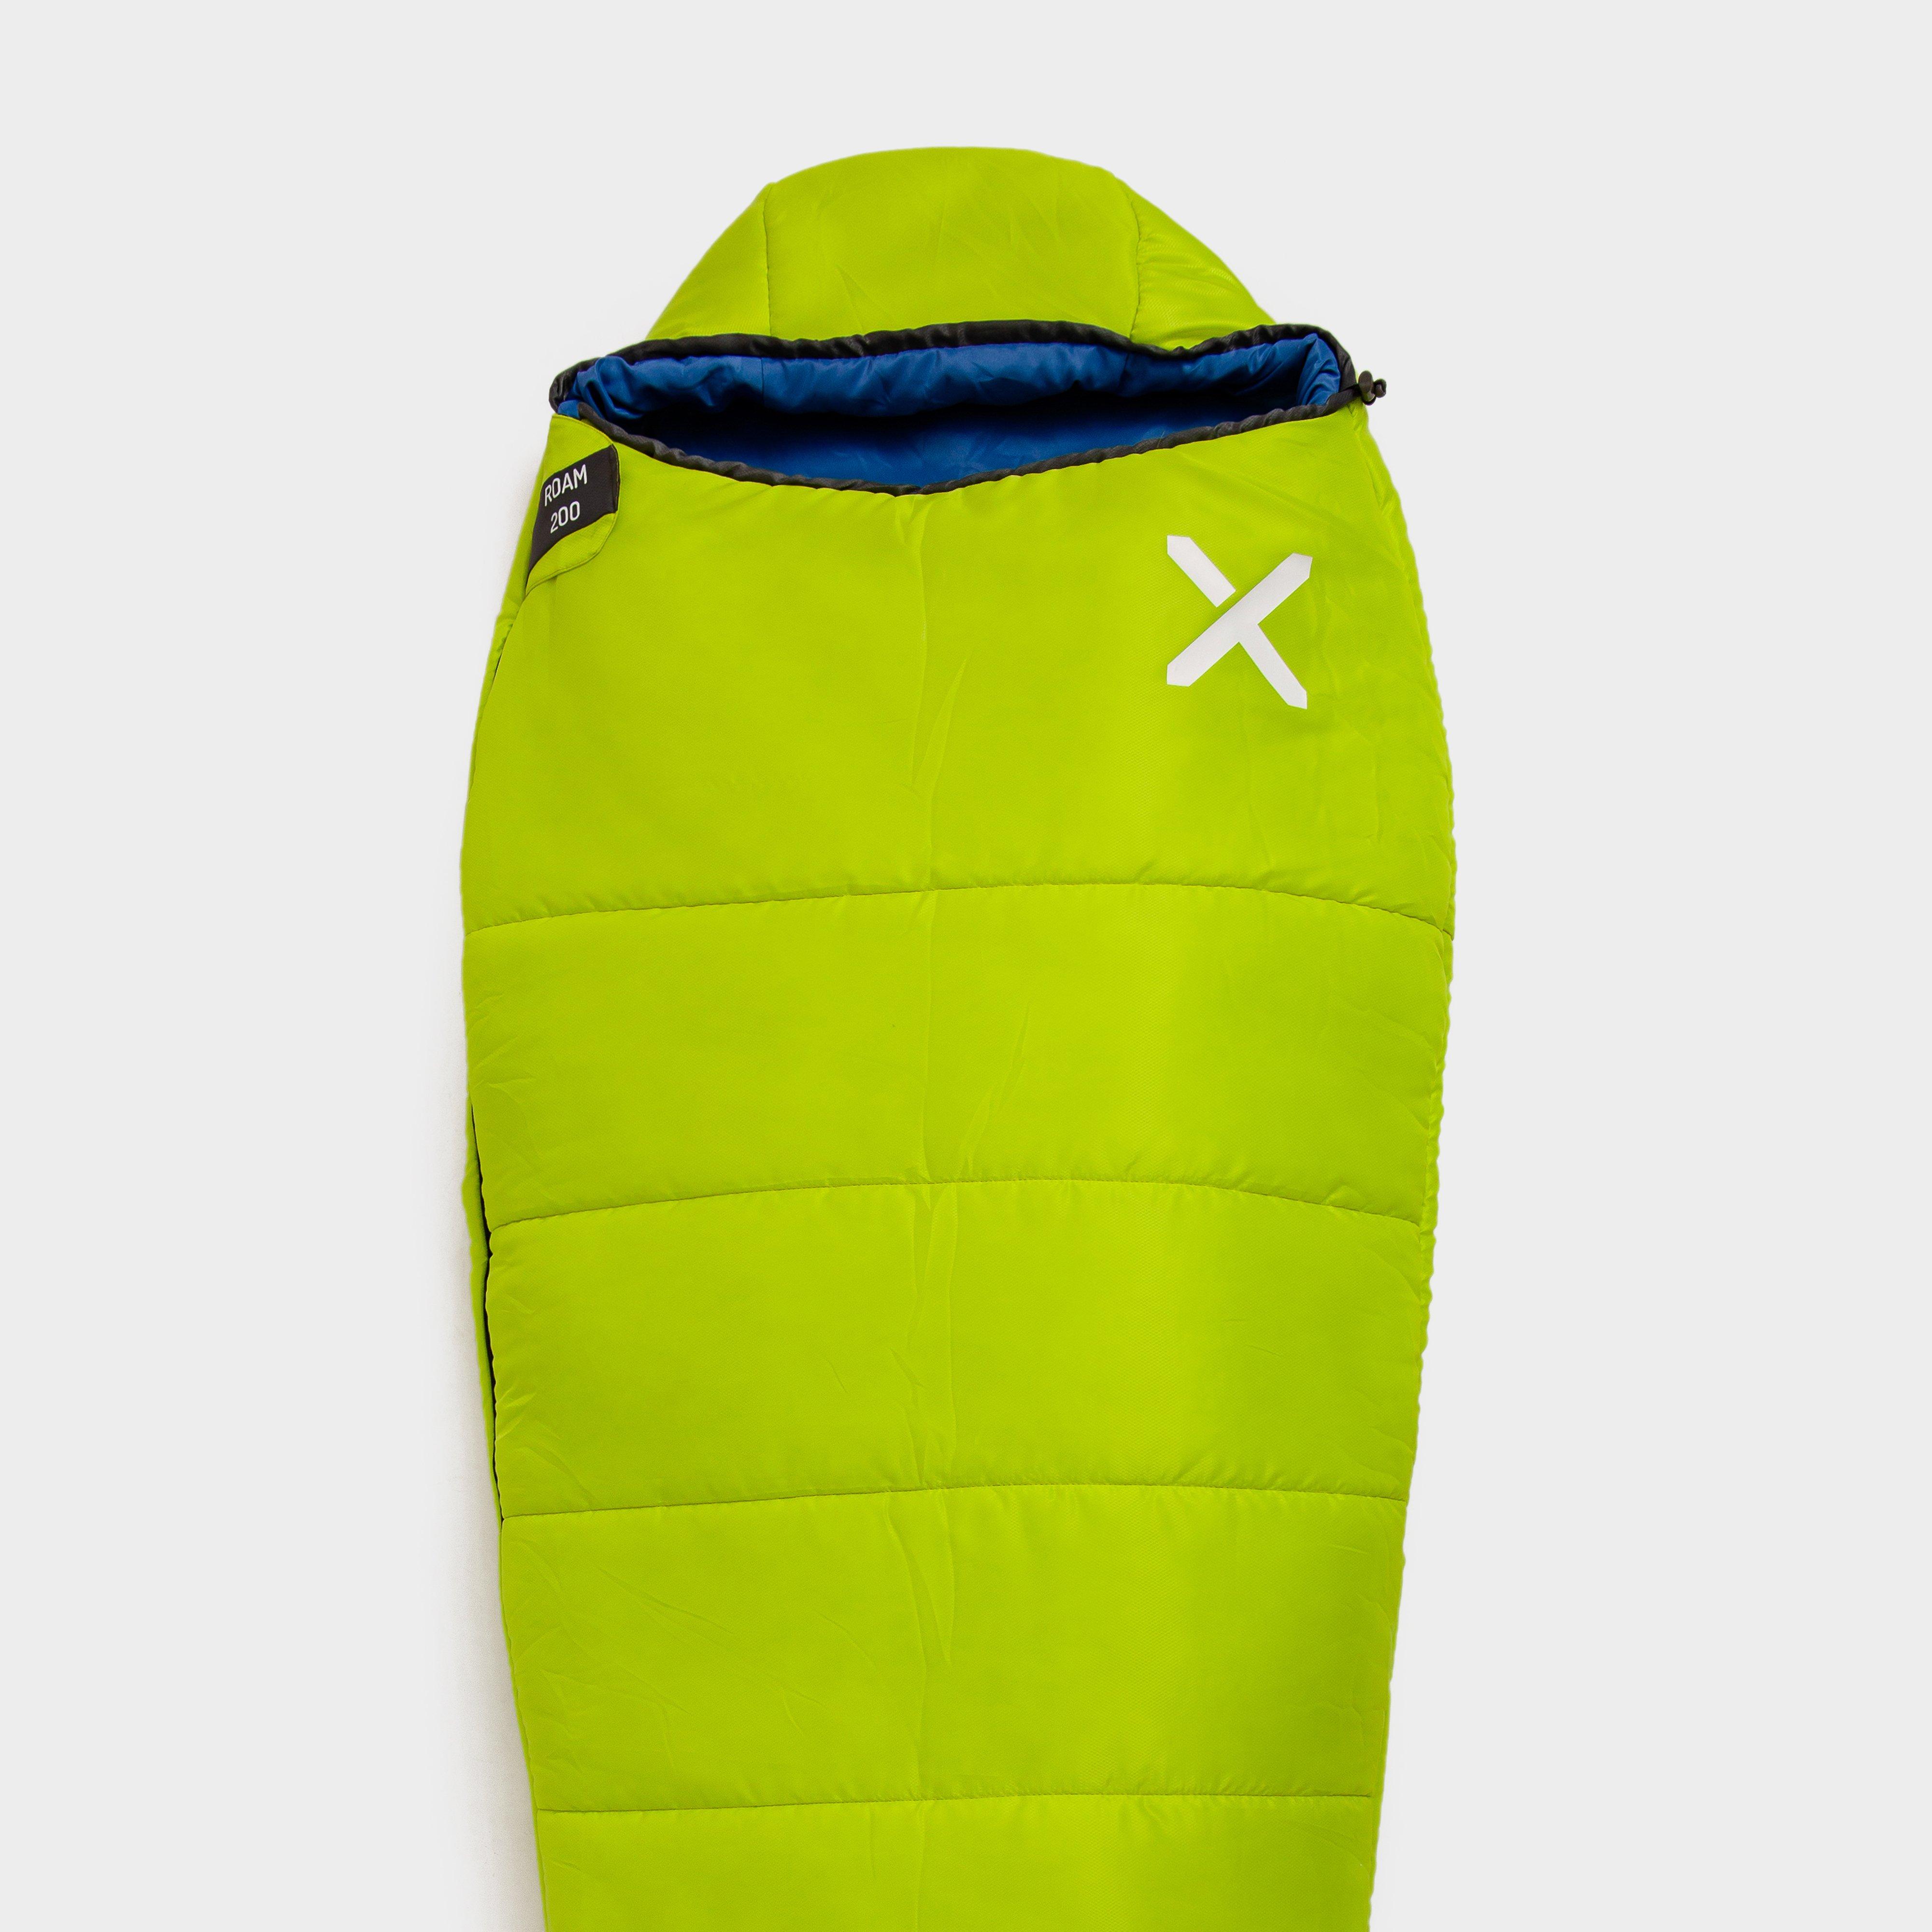 OEX Oex Roam 200 Sleeping Bag - Green, Green